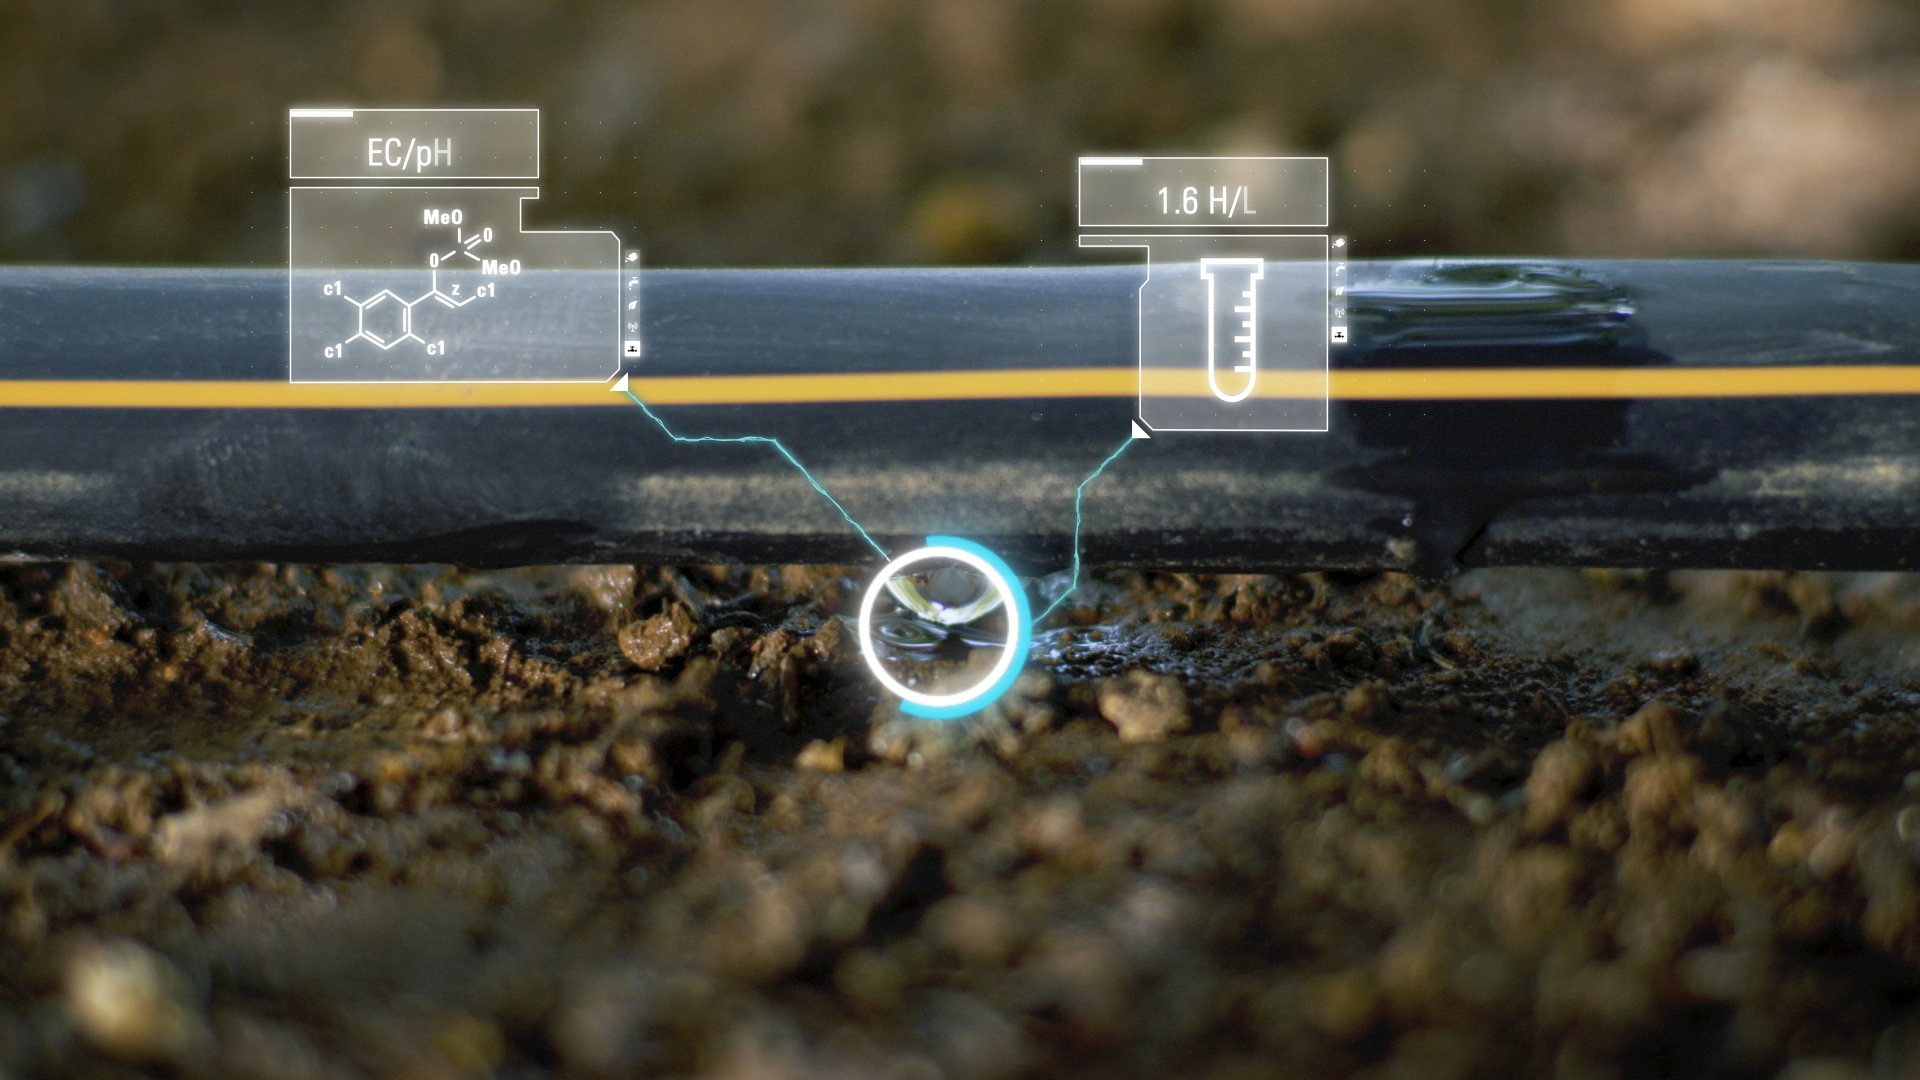 Irrigation system sensors